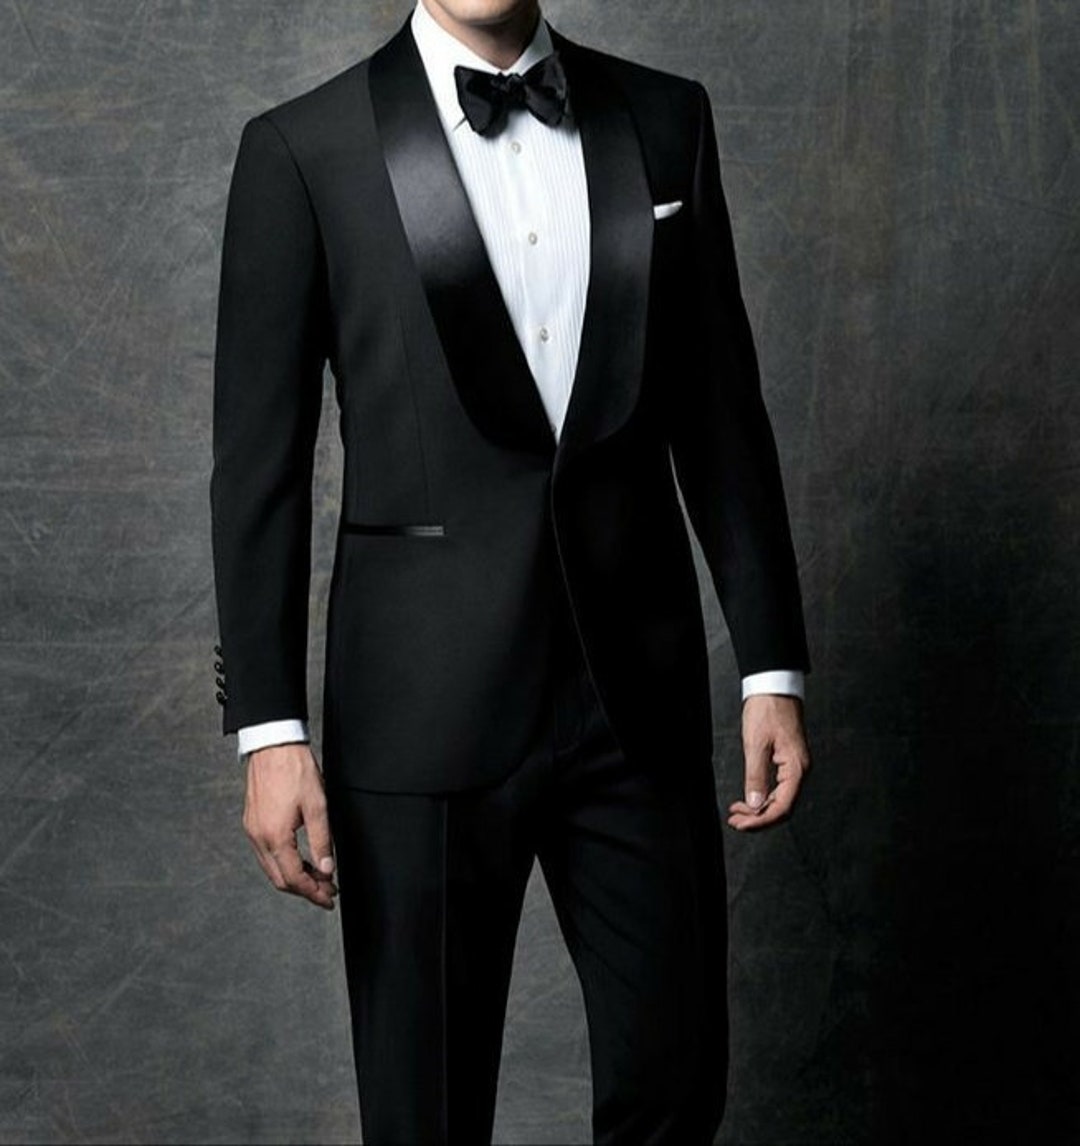 Men Suit Black Tuxedo Suit 2 Piece Stylish Suit Wedding Wear Suit for Men  Gift for Him Formal Fashion Wear Gift for Men -  Canada